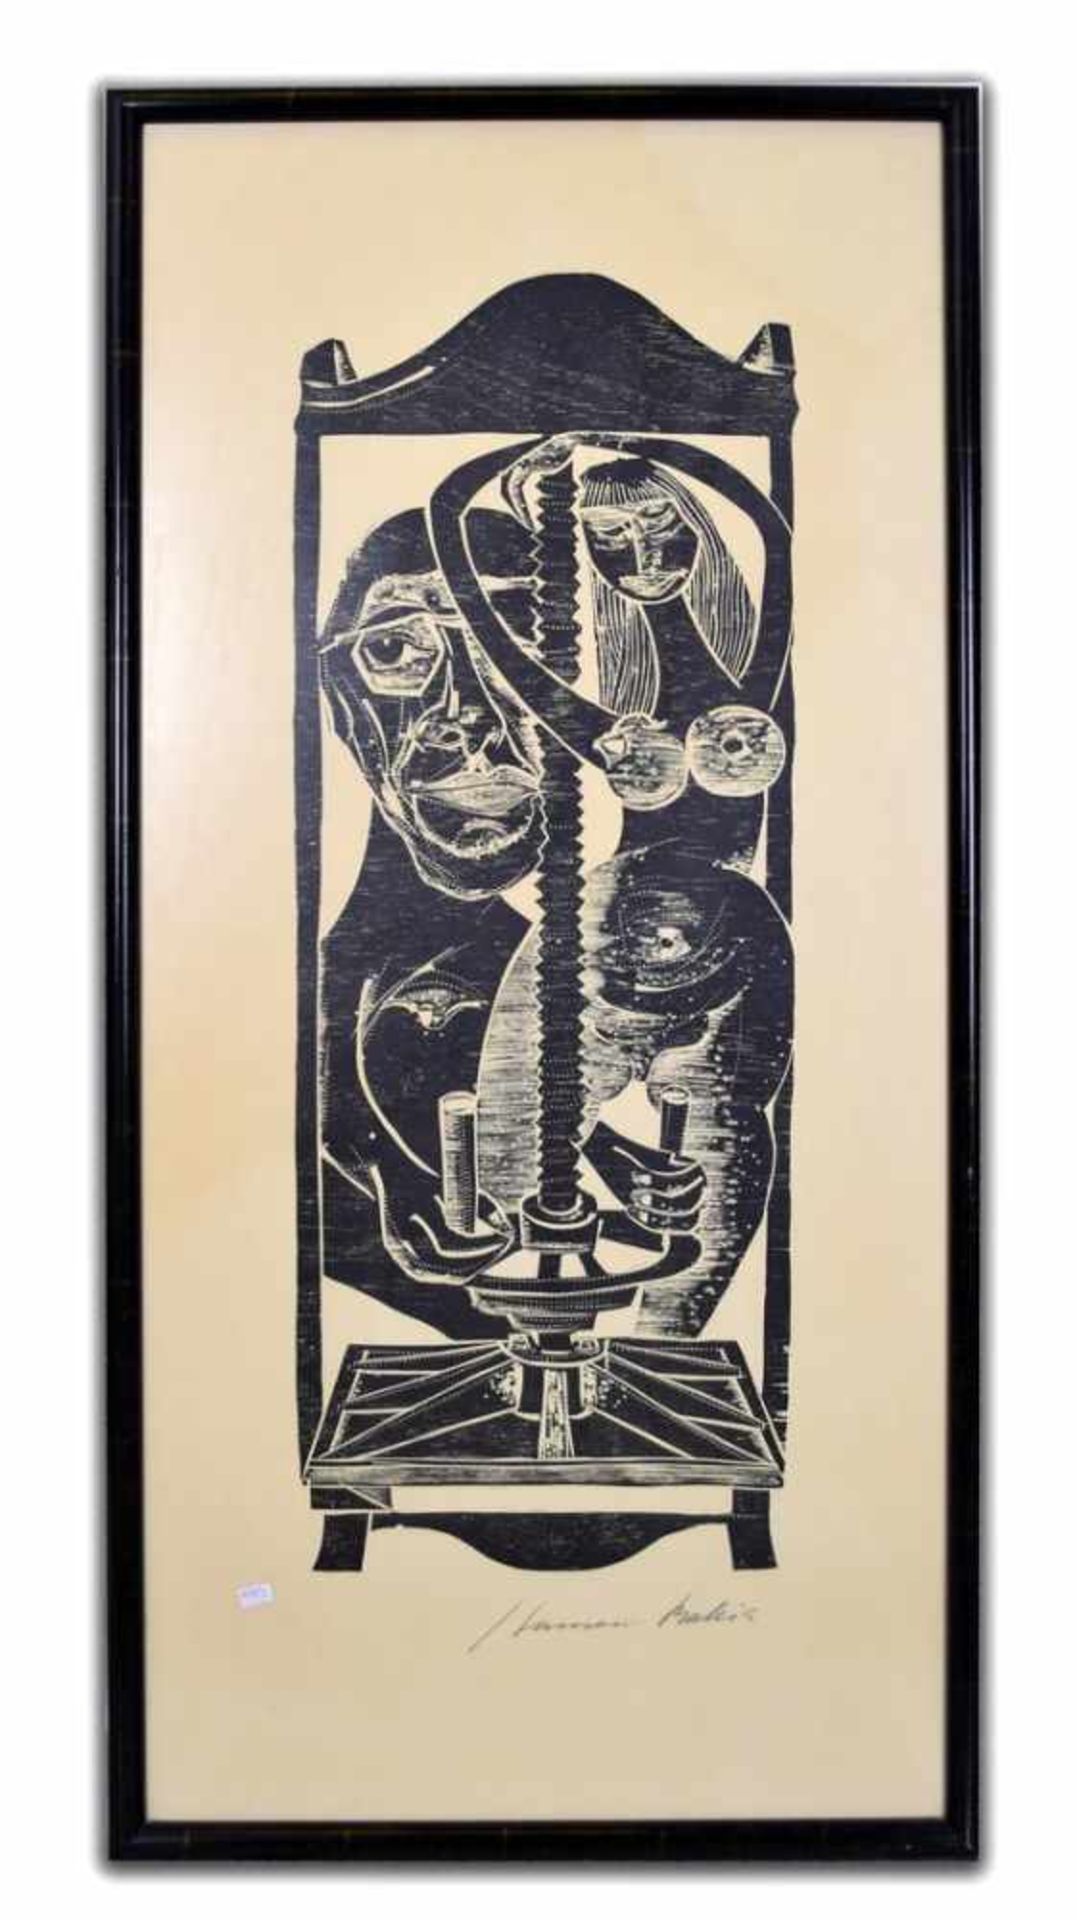 LithografieDie Presse, u.r.sign. Hansen Bahia, im schwarzen Rahmen, 45 X 96 cm